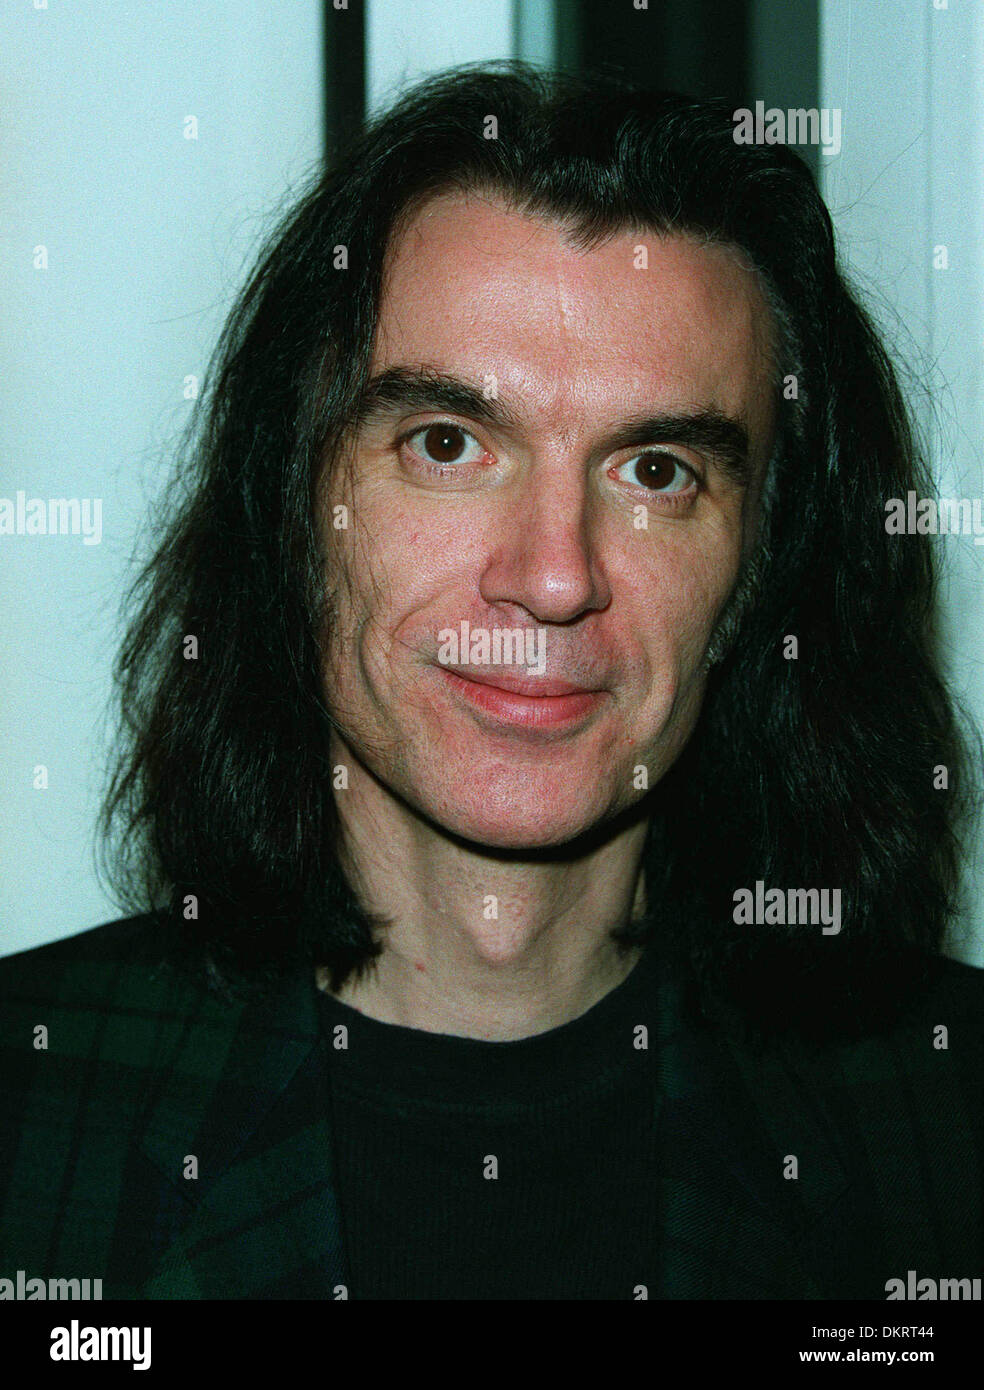 DAVID BYRNE.MUSICIAN, ''TALKING HEADS''.21/02/1995.E33C21 Stock Photo